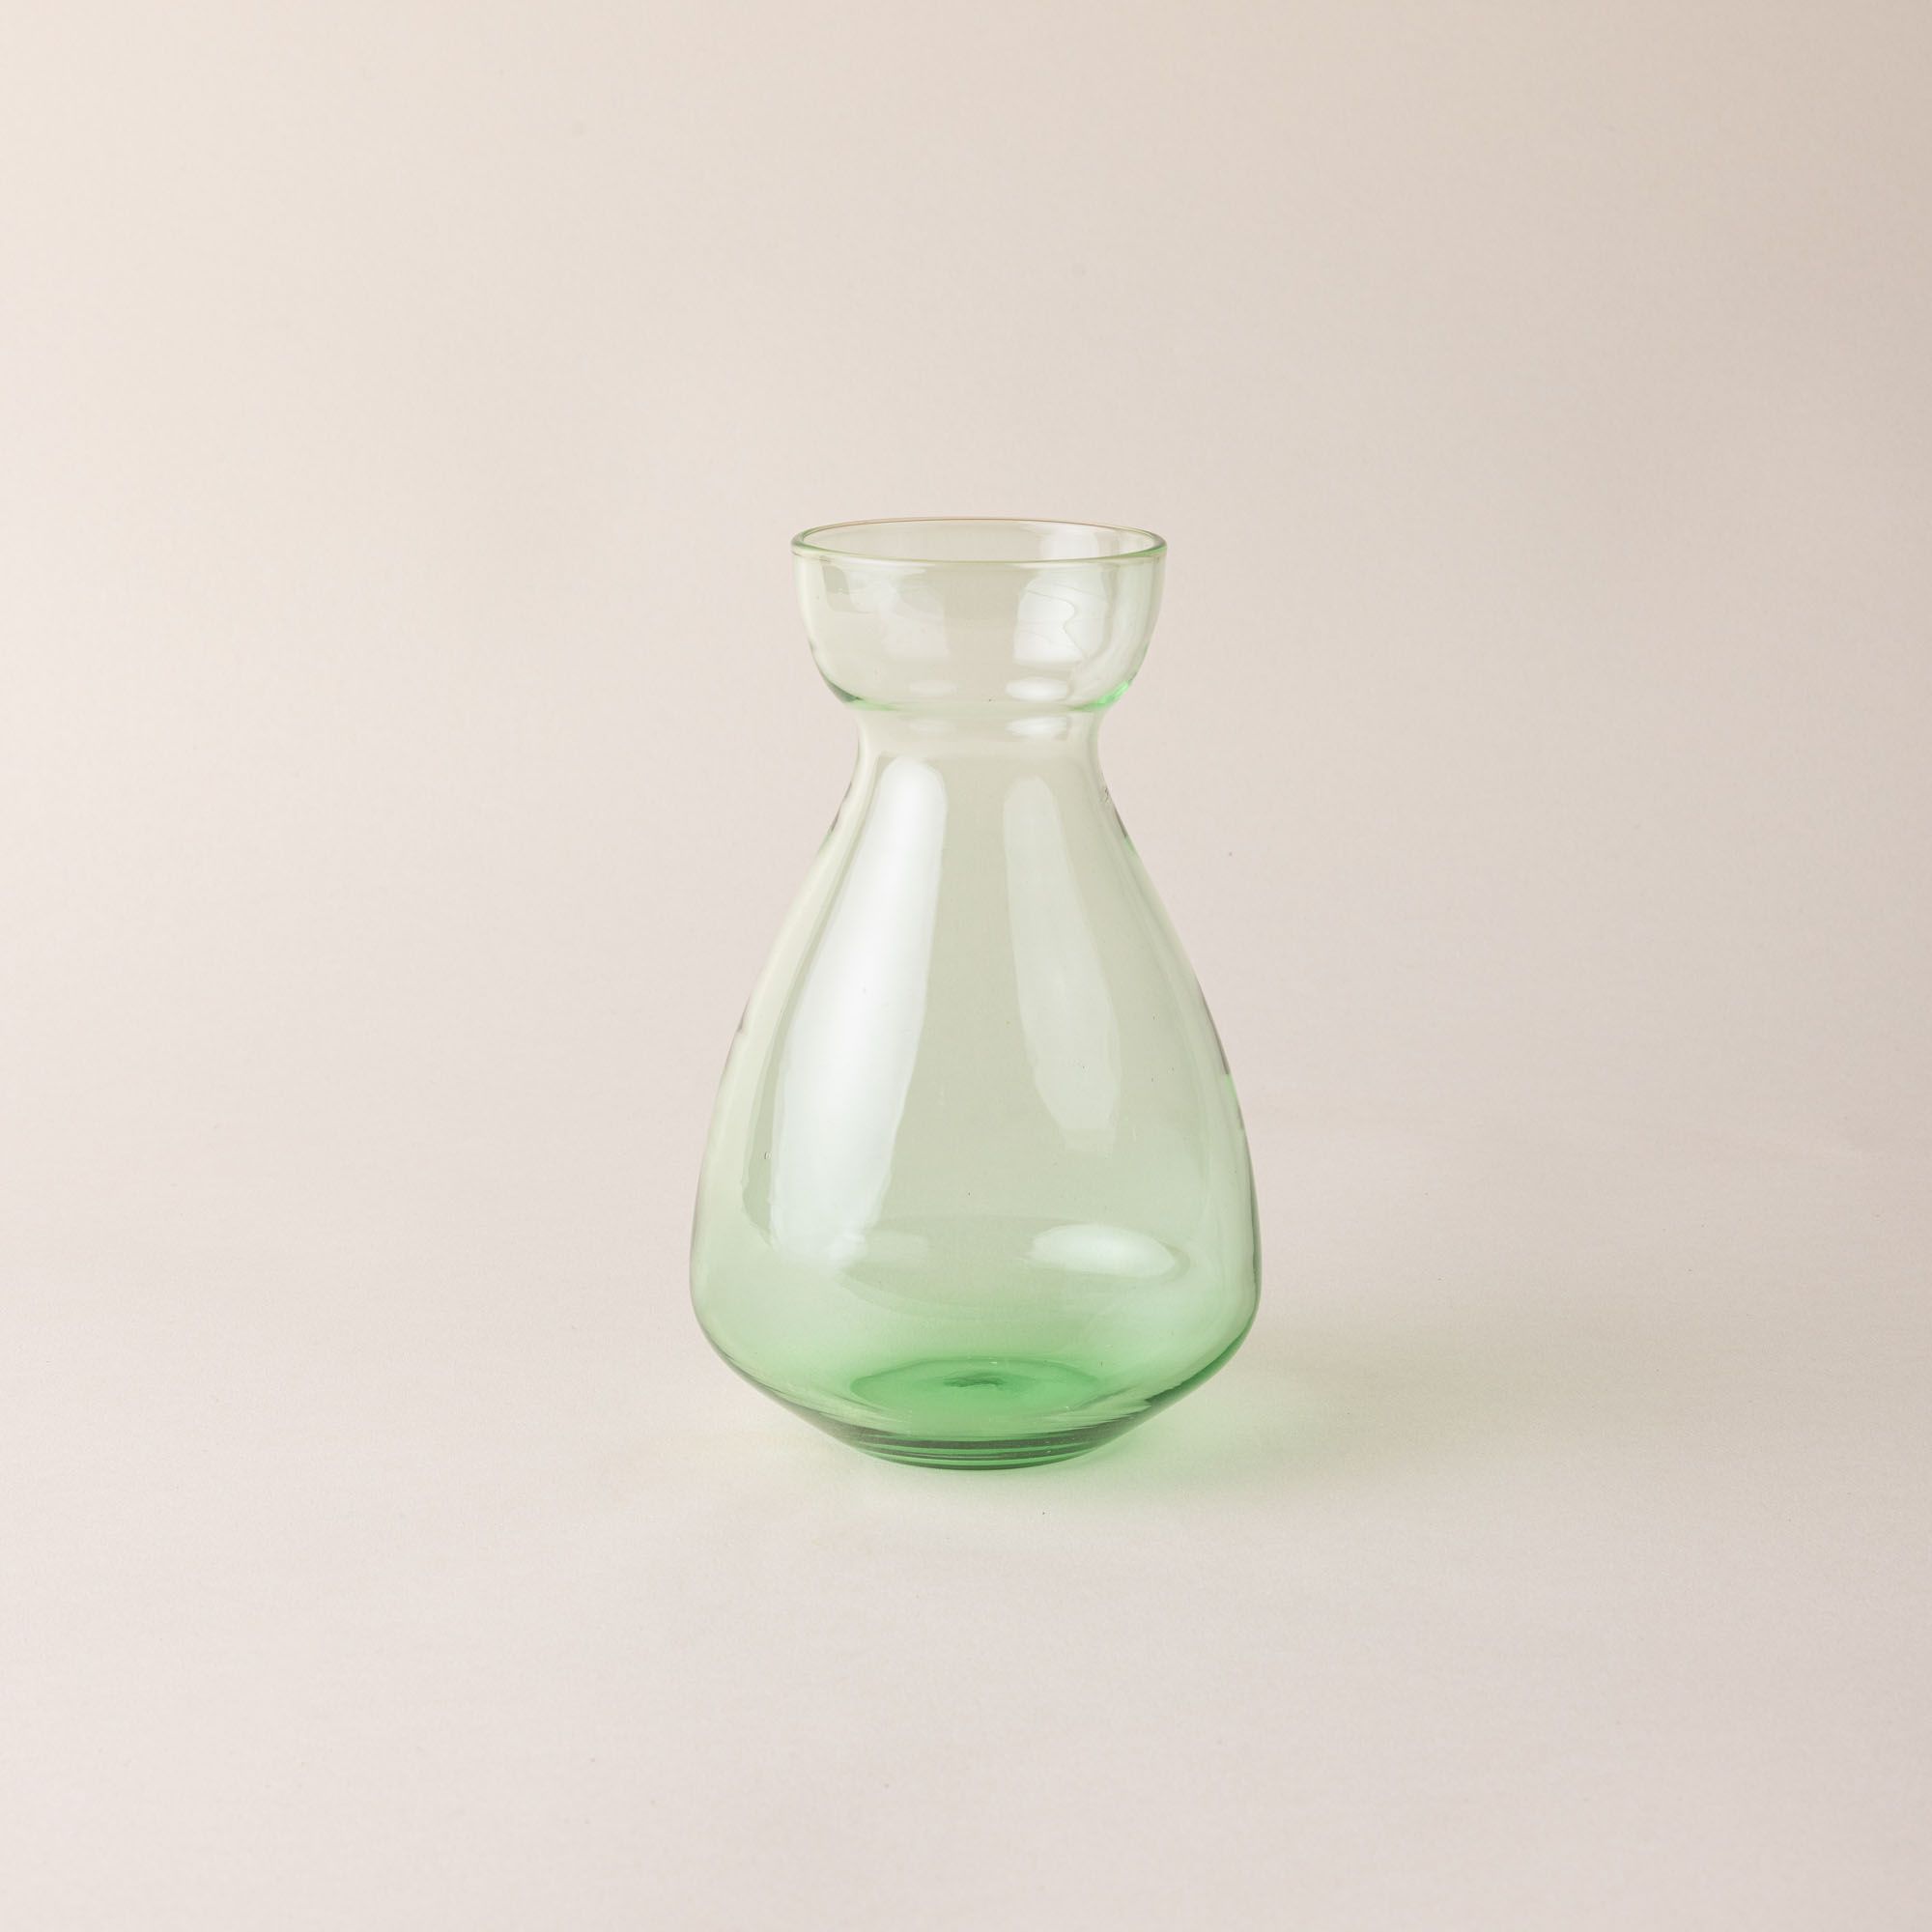 A green simple sculptural glass bulb vase.